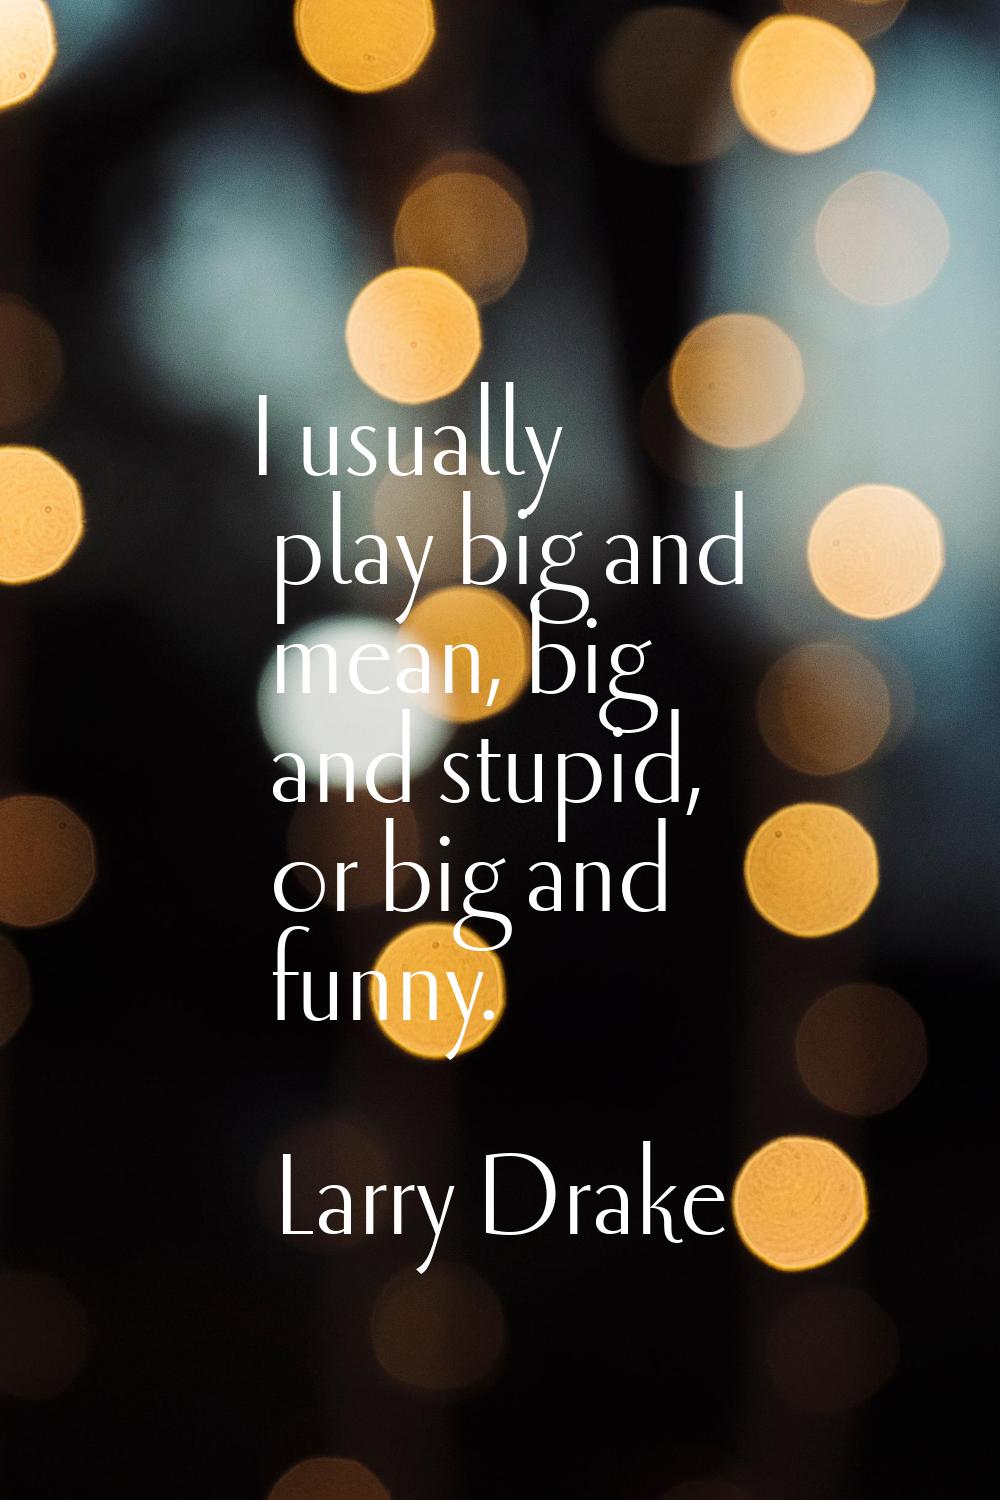 I usually play big and mean, big and stupid, or big and funny.